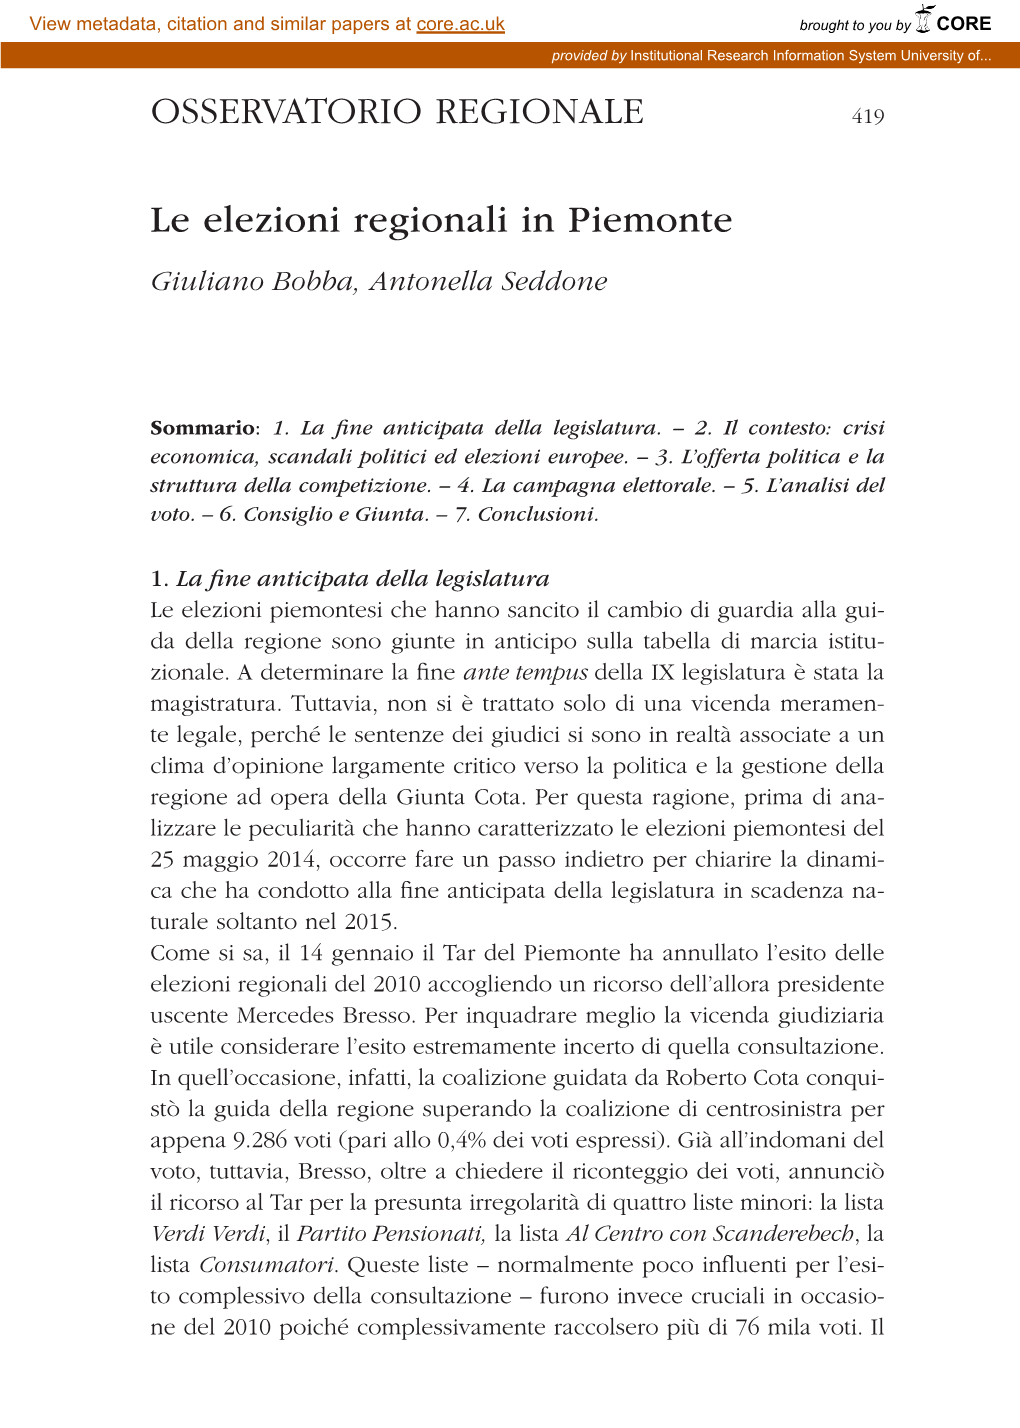 OSSERVATORIO REGIONALE Le Elezioni Regionali in Piemonte